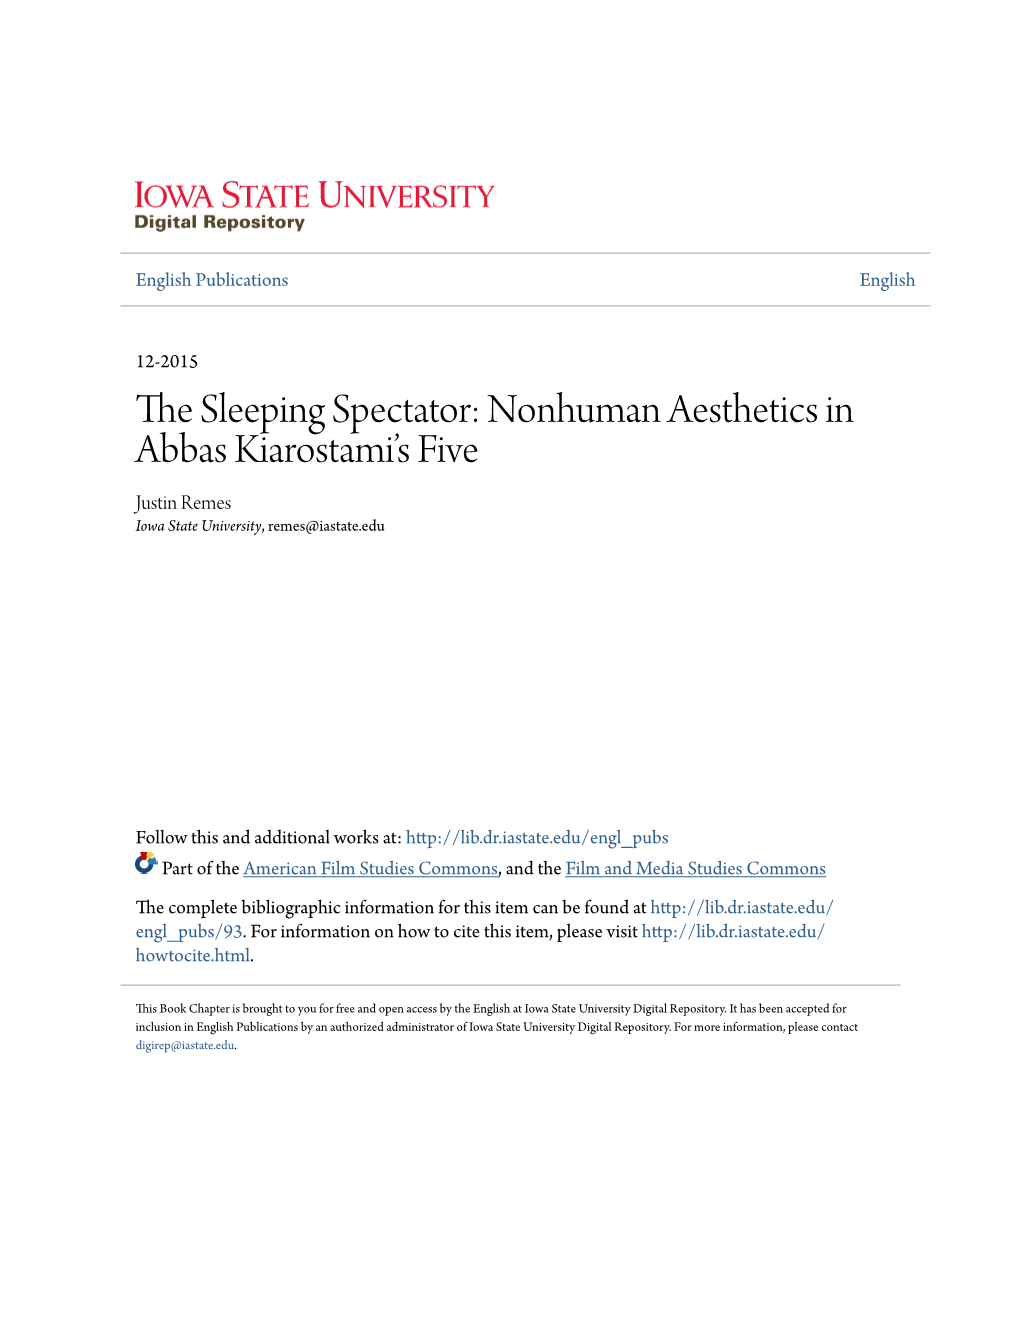 The Sleeping Spectator: Non-Human Aesthetics in Abbas Kiarostami’S Five: Dedicated to Ozu